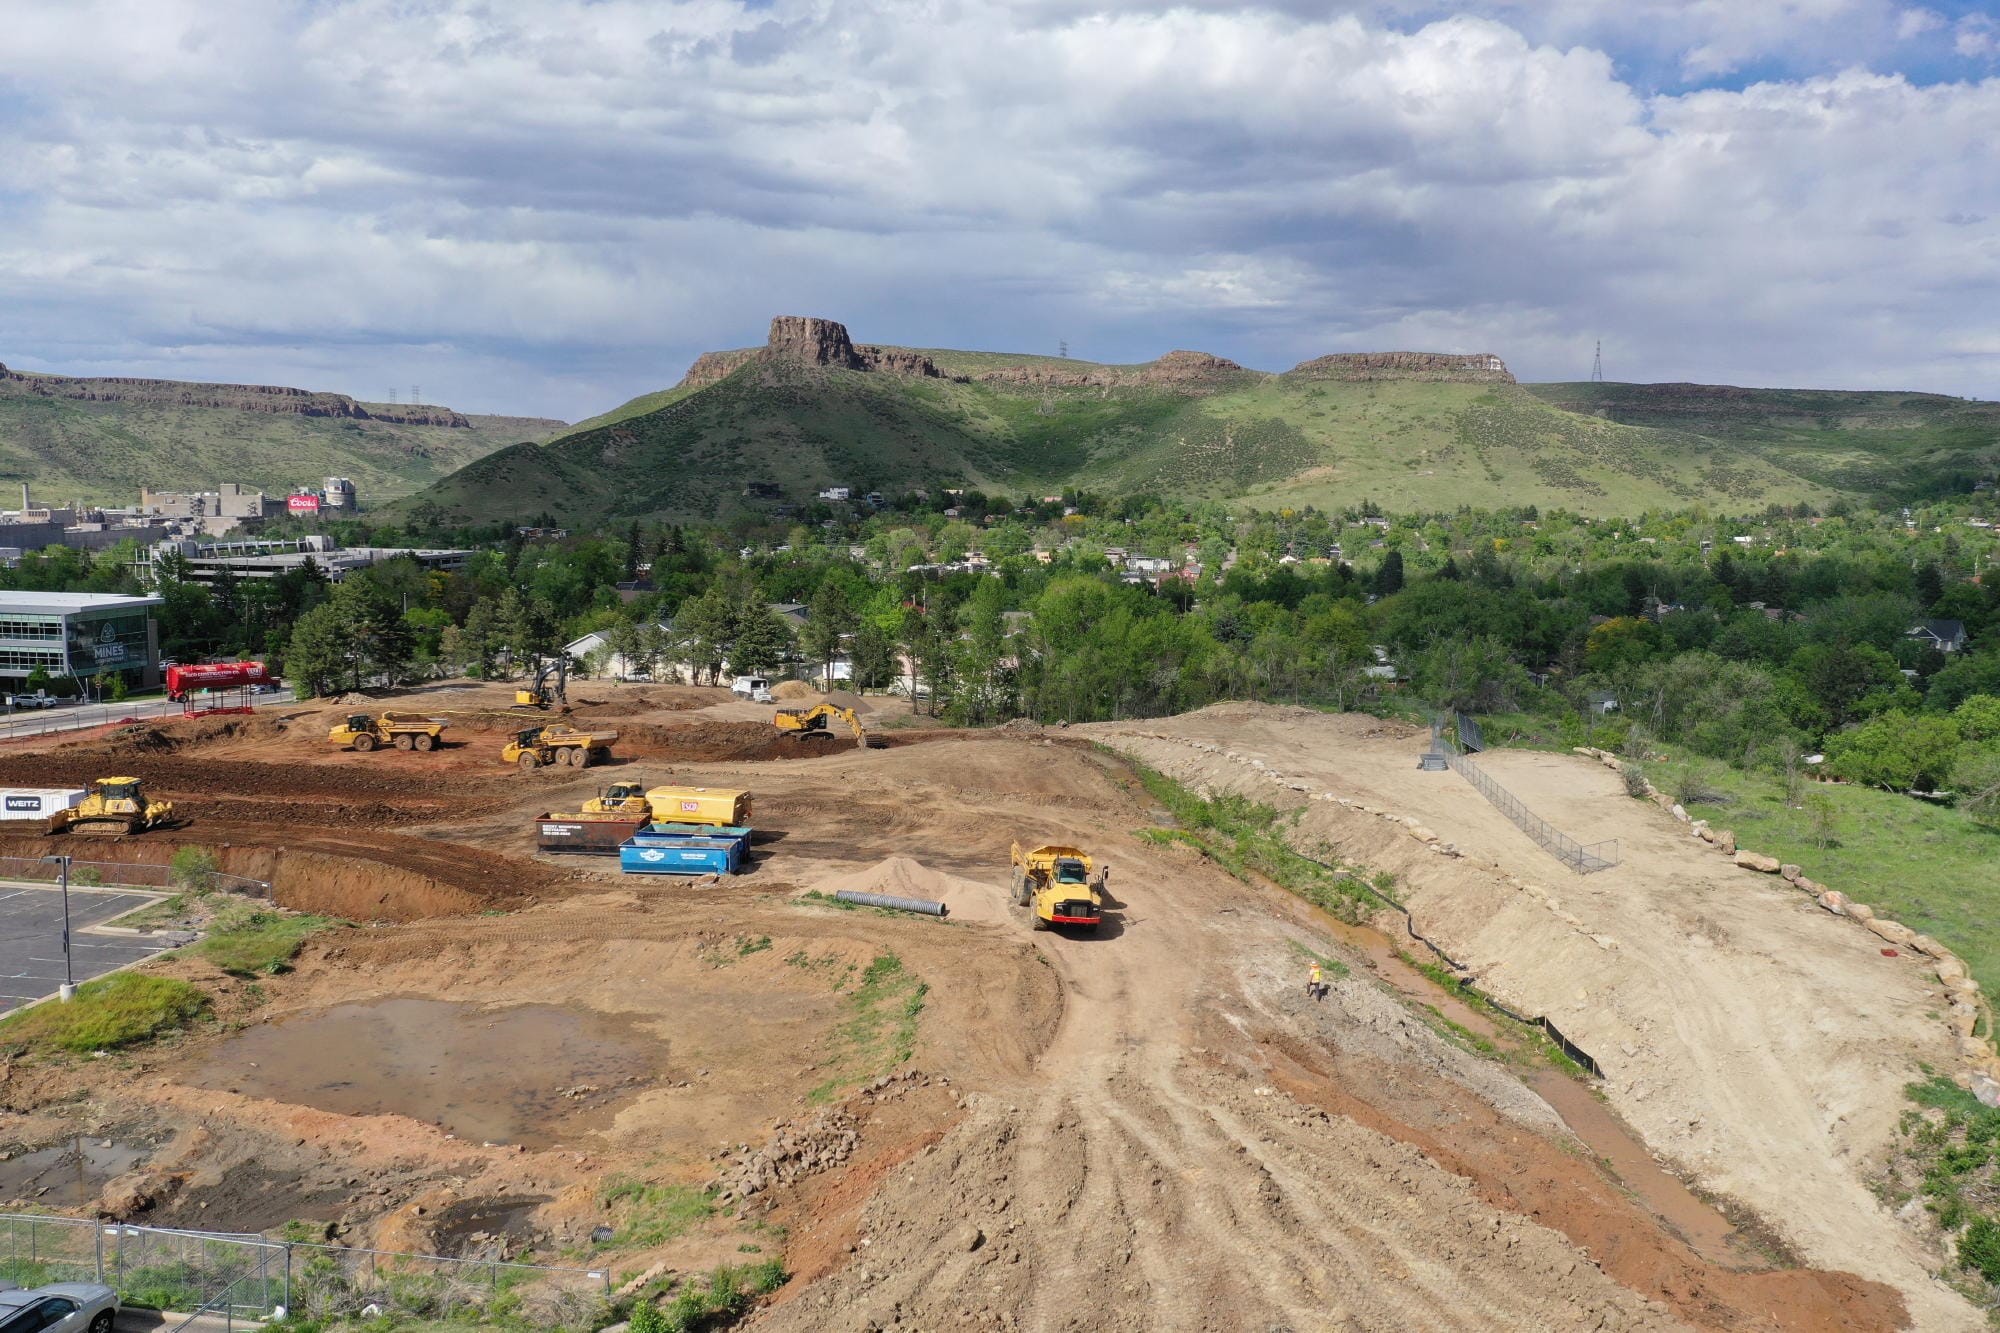 bulldozers grading the site, exposing reddish soil